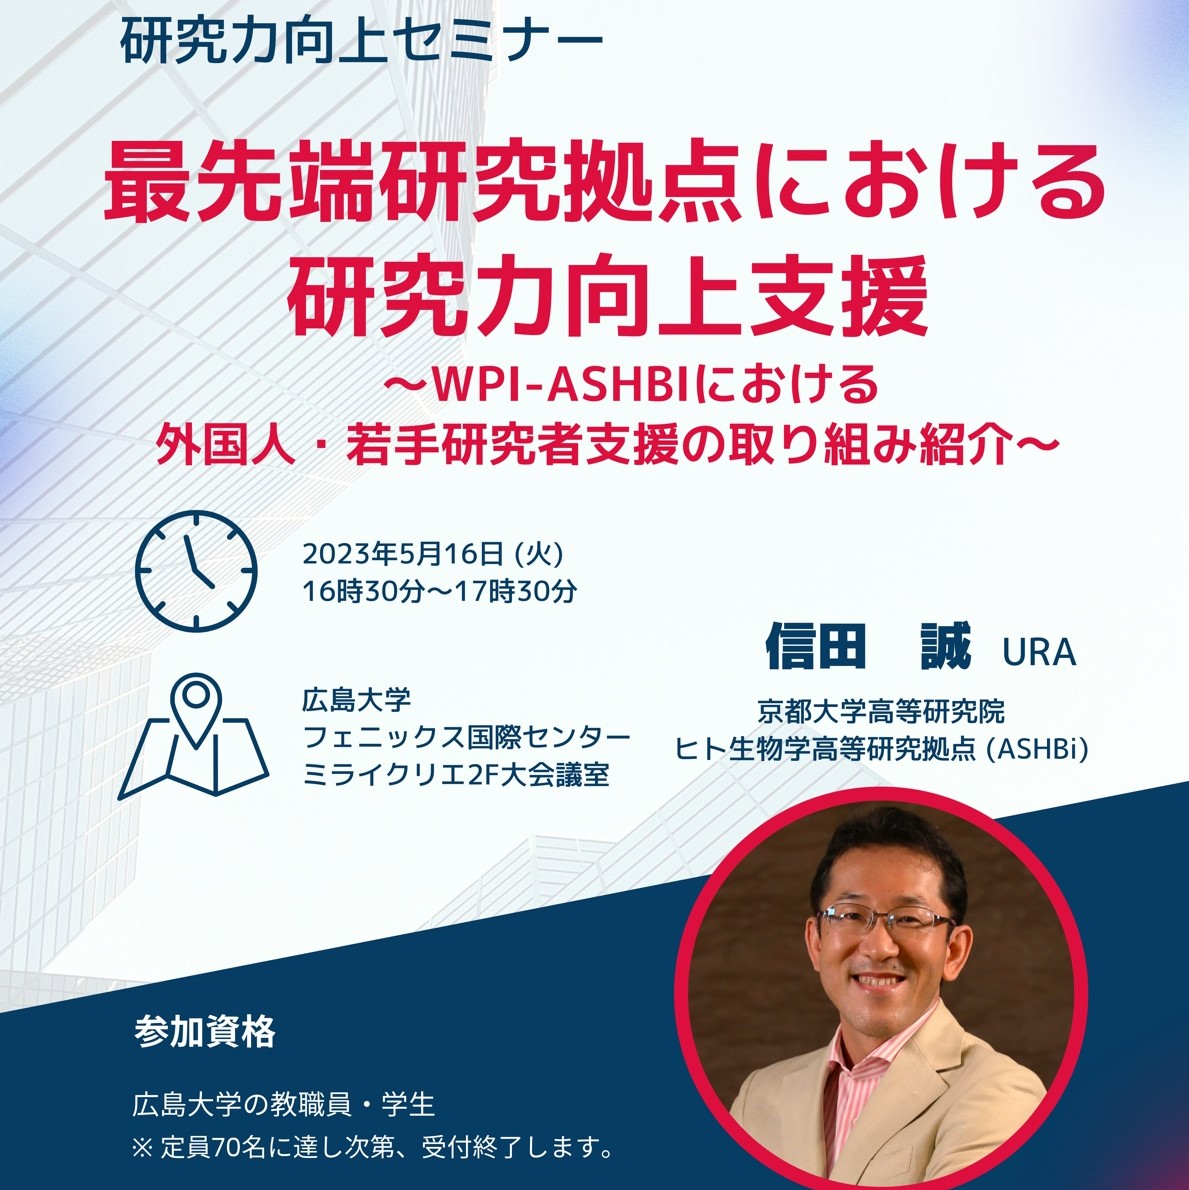 URA Makoto Shida gave a lecture at Hiroshima University’s Research Skill Enhancement Seminar